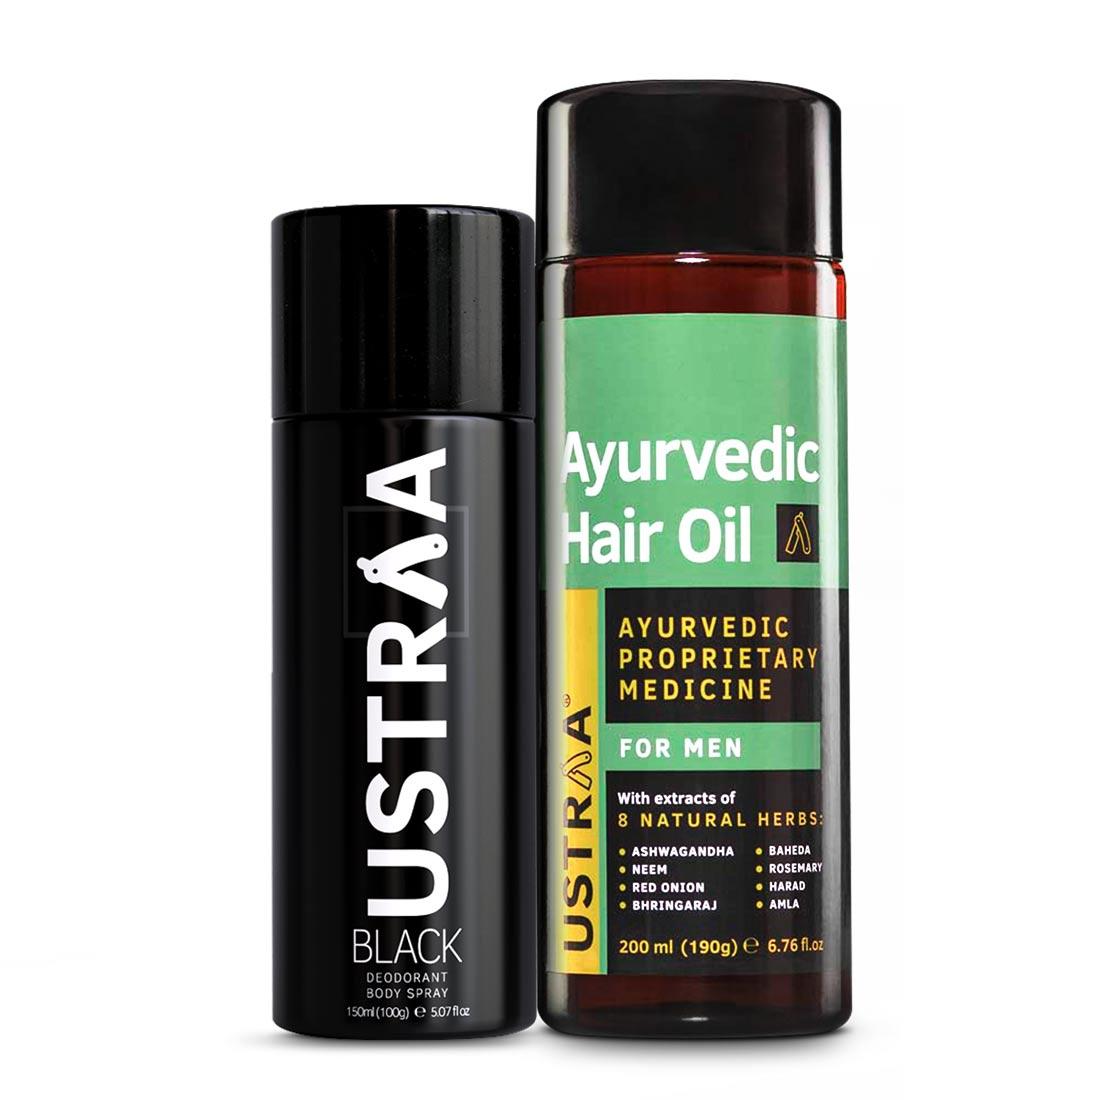 Ustraa Black Deodorant Combo and Ayurvedic Hair Oil Combo For Men